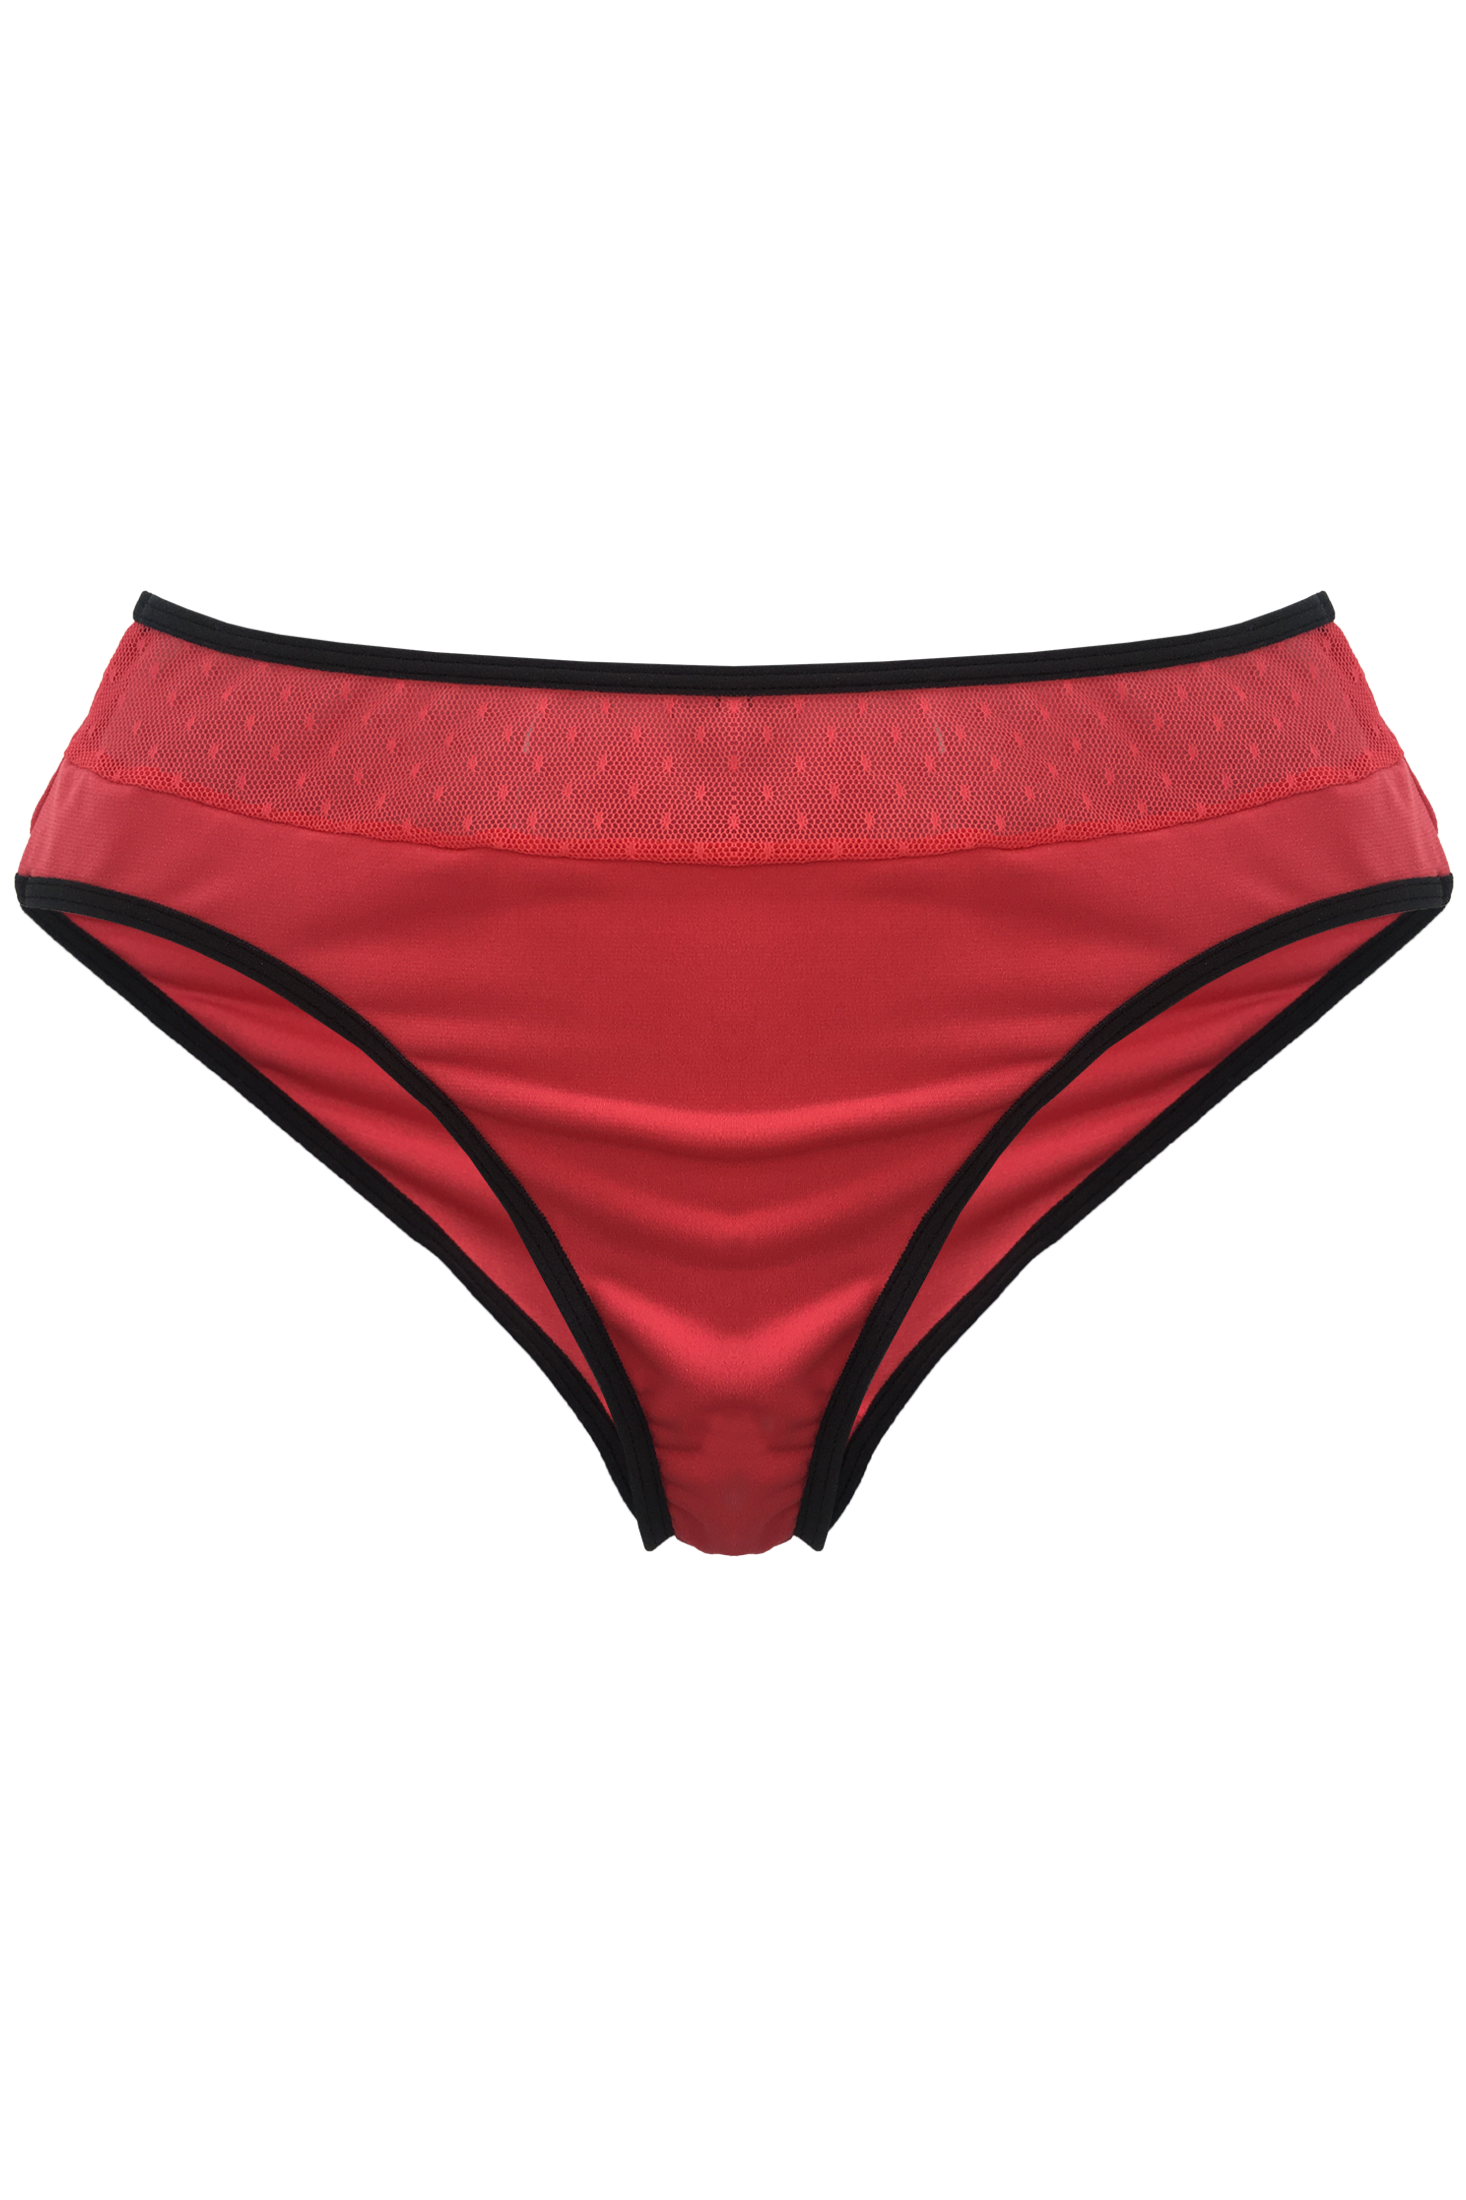 Lingerie Letters Watermelon Brief - Women's Underwear Online